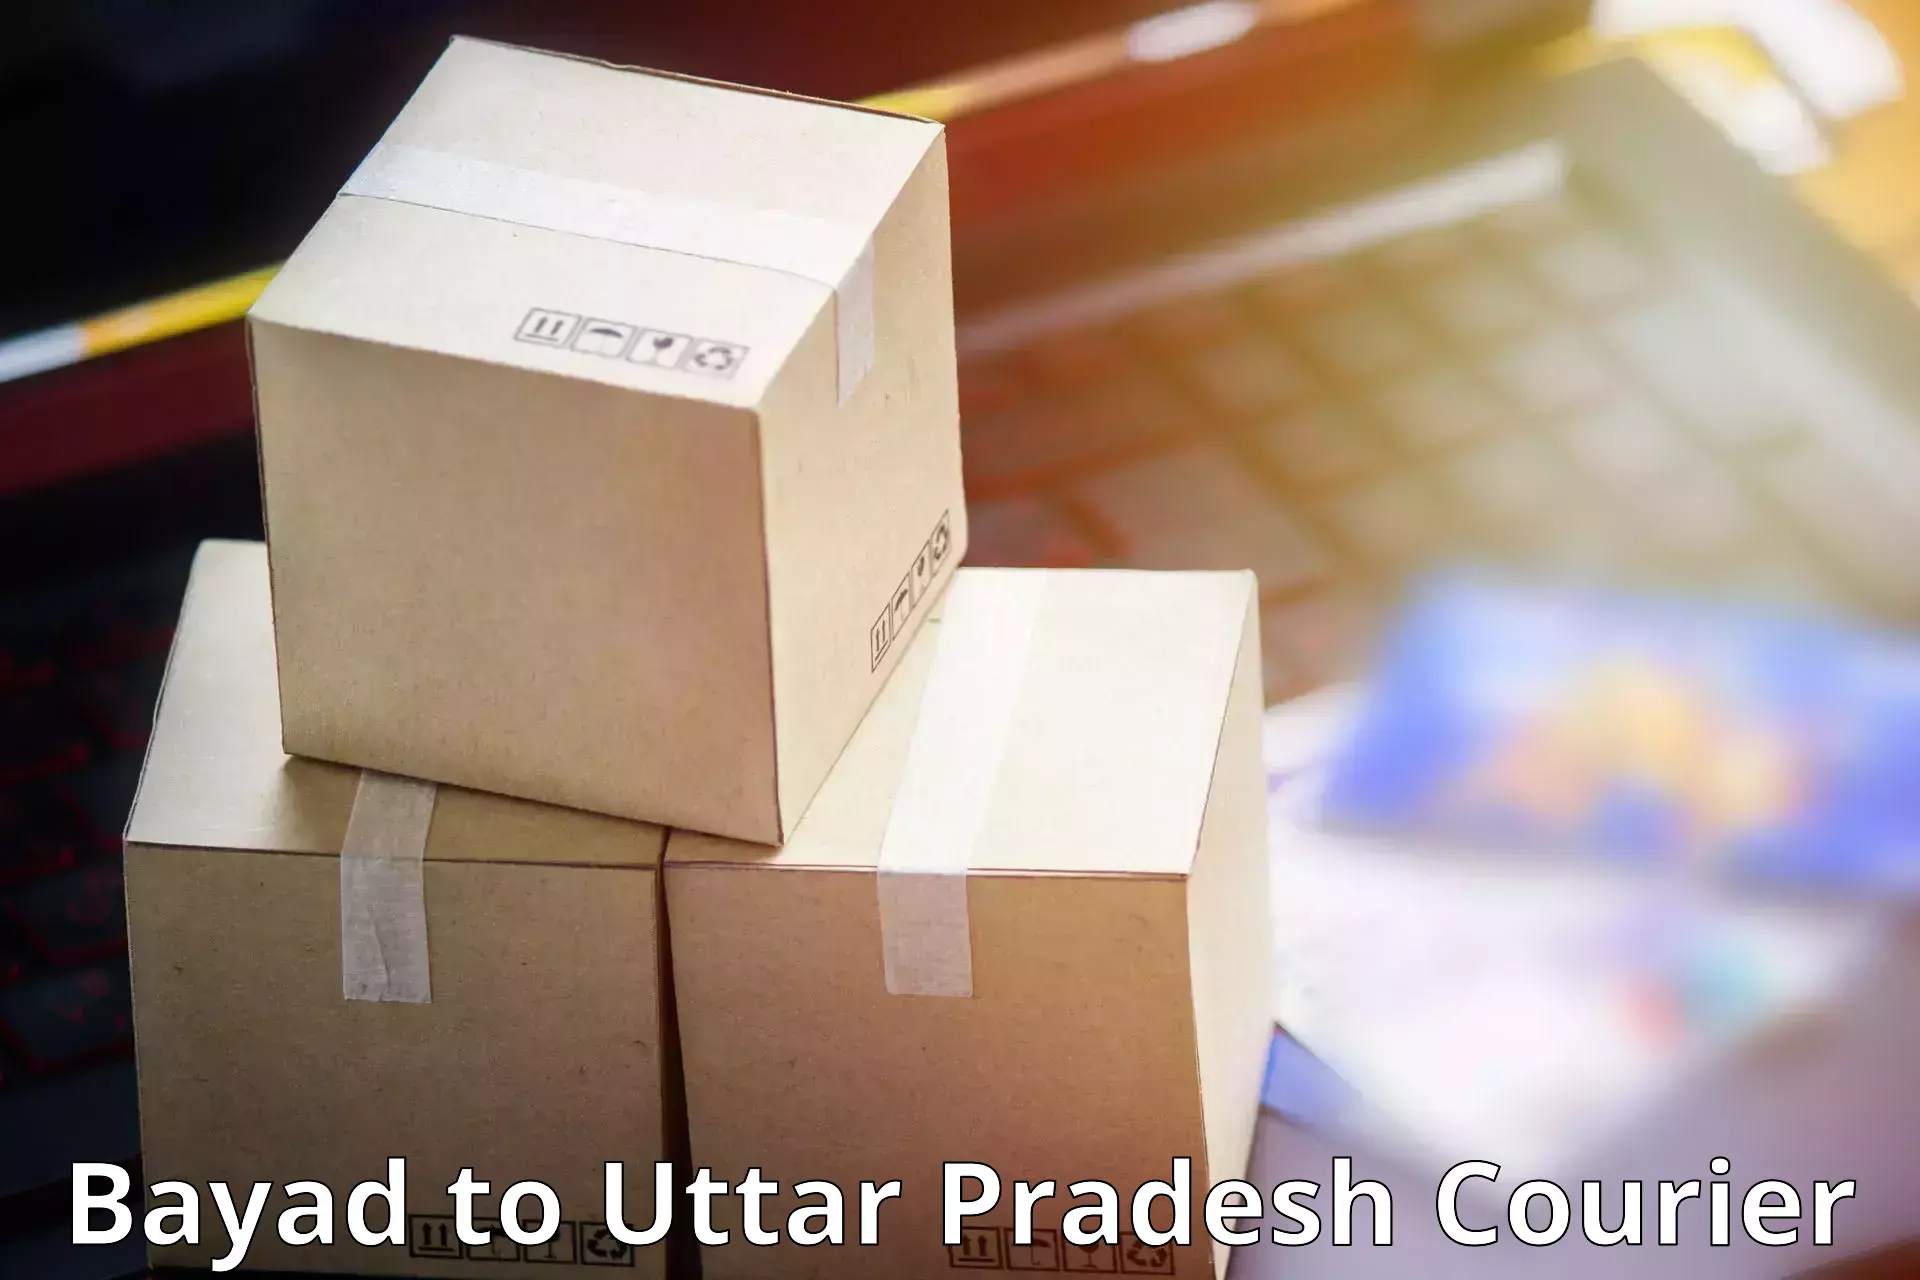 High-priority parcel service Bayad to Uttar Pradesh